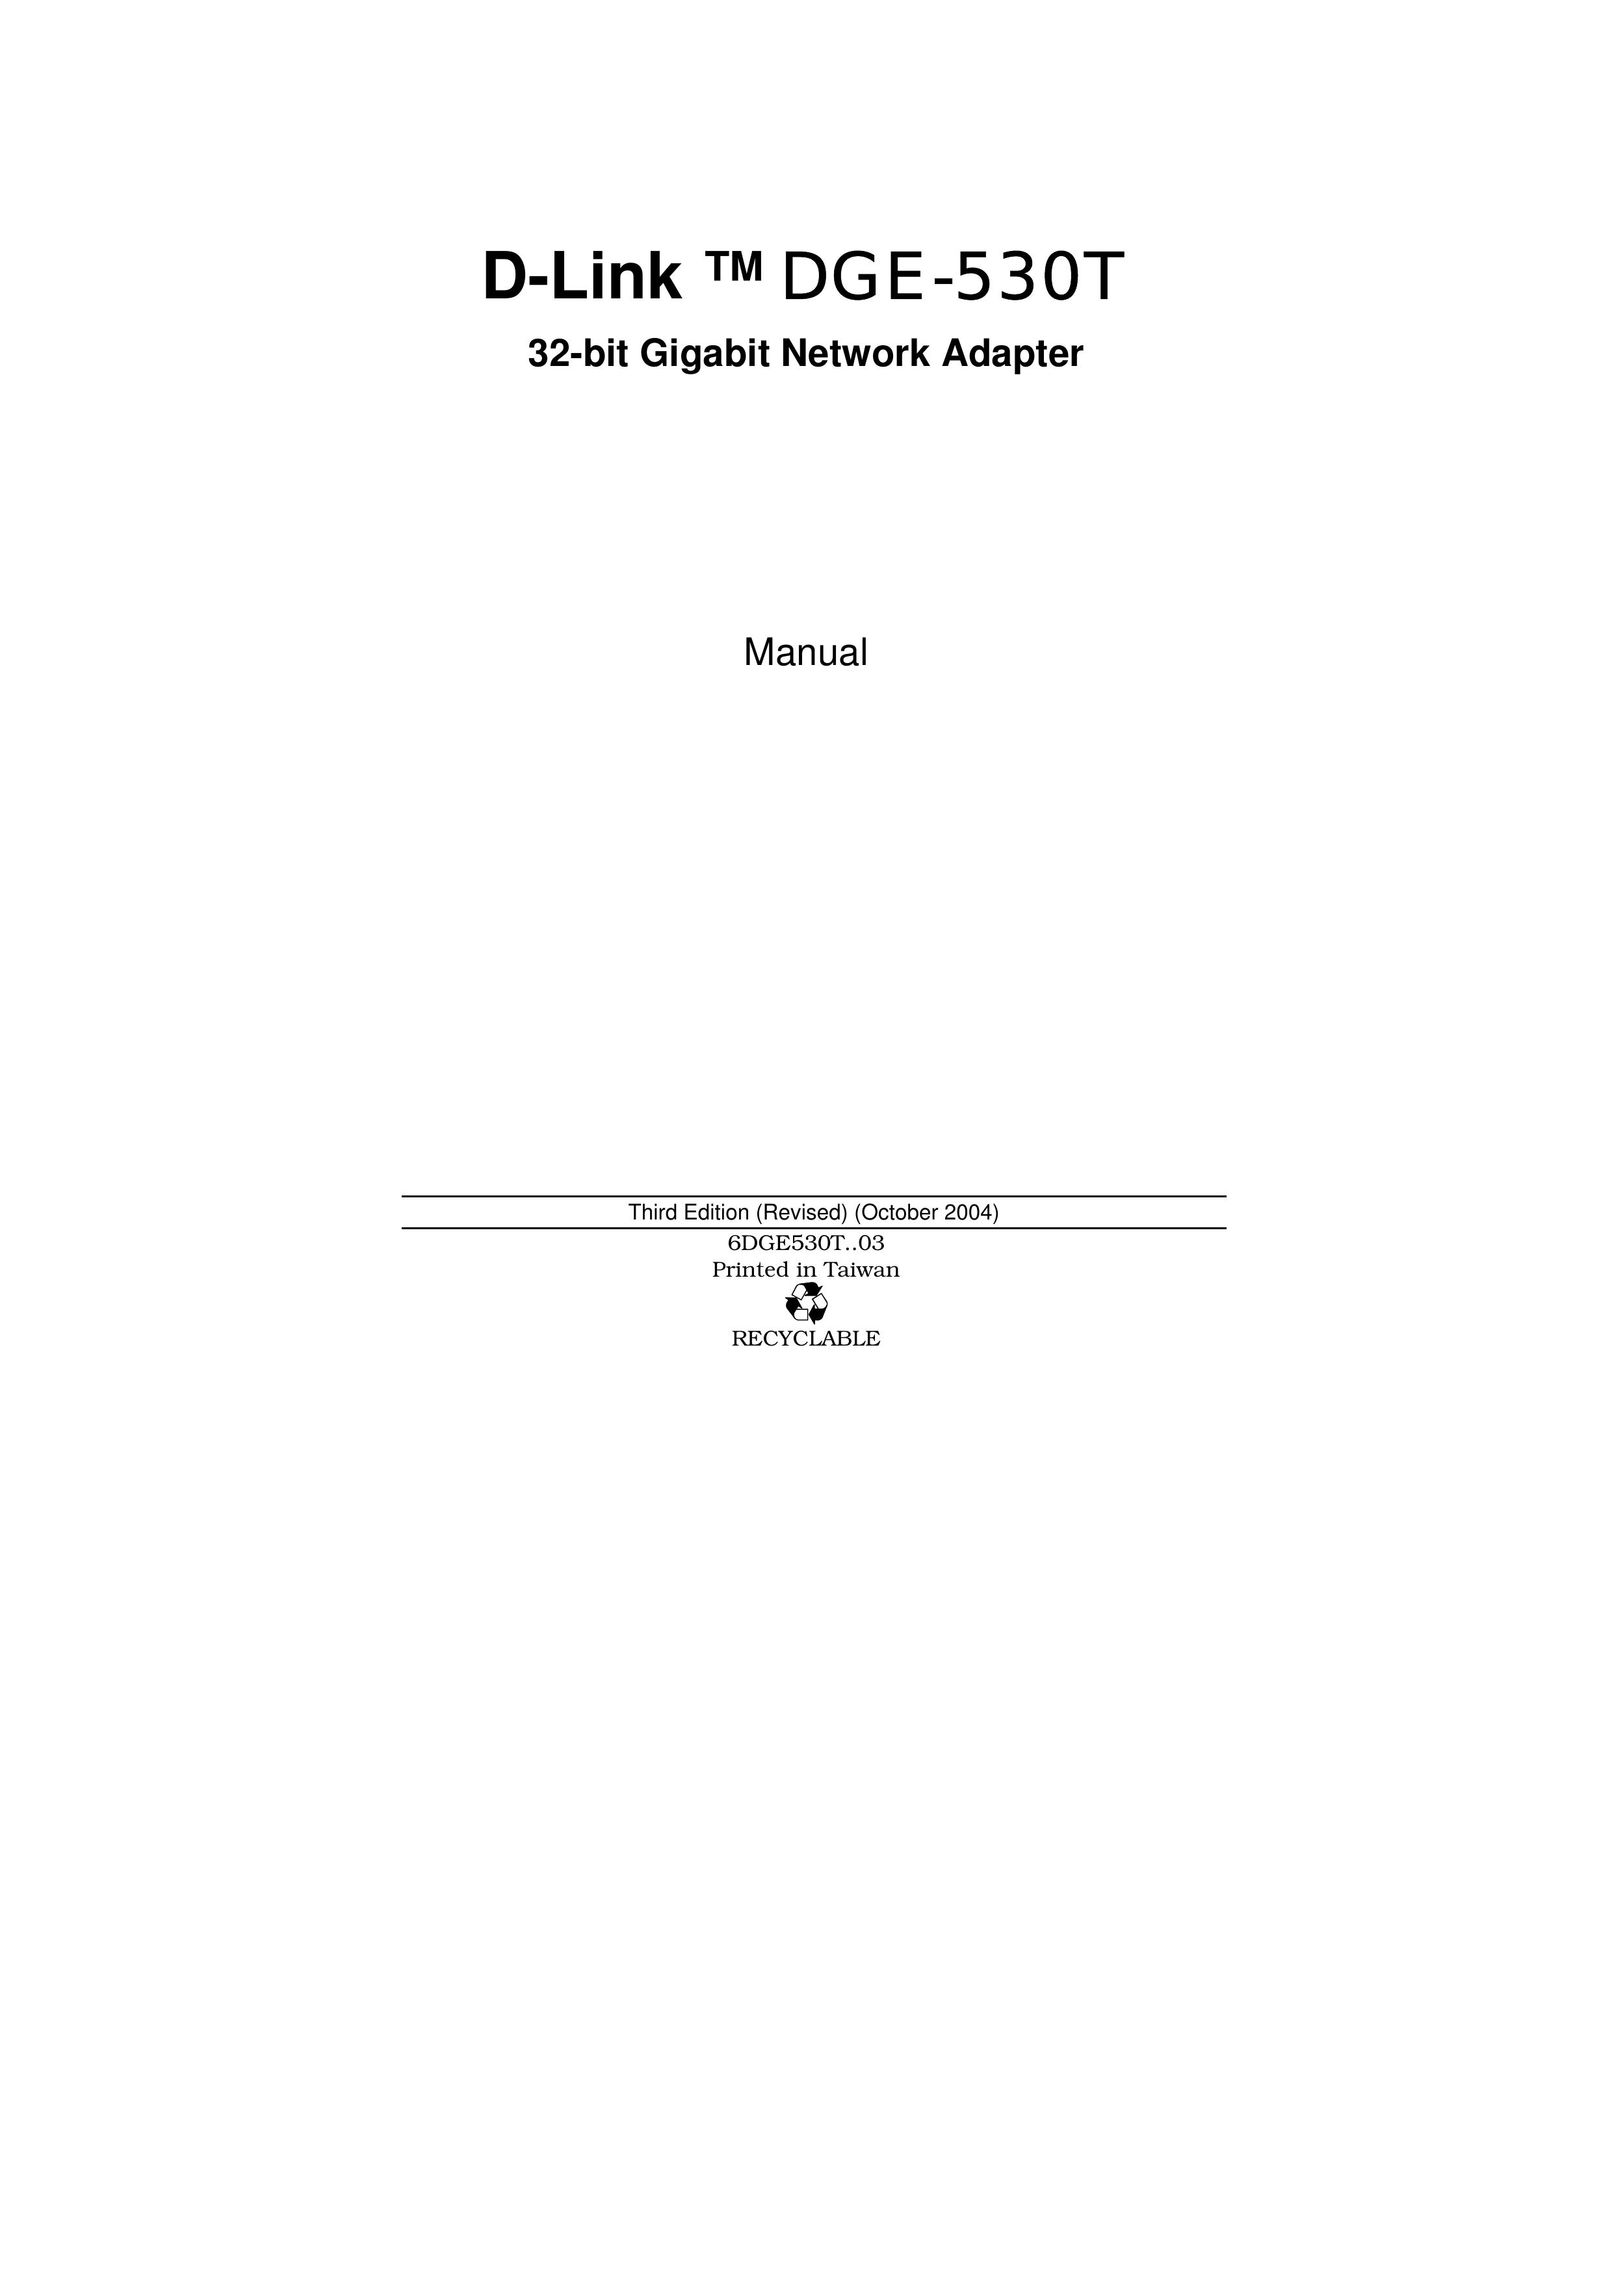 D-Link DGE-530T Network Cables User Manual